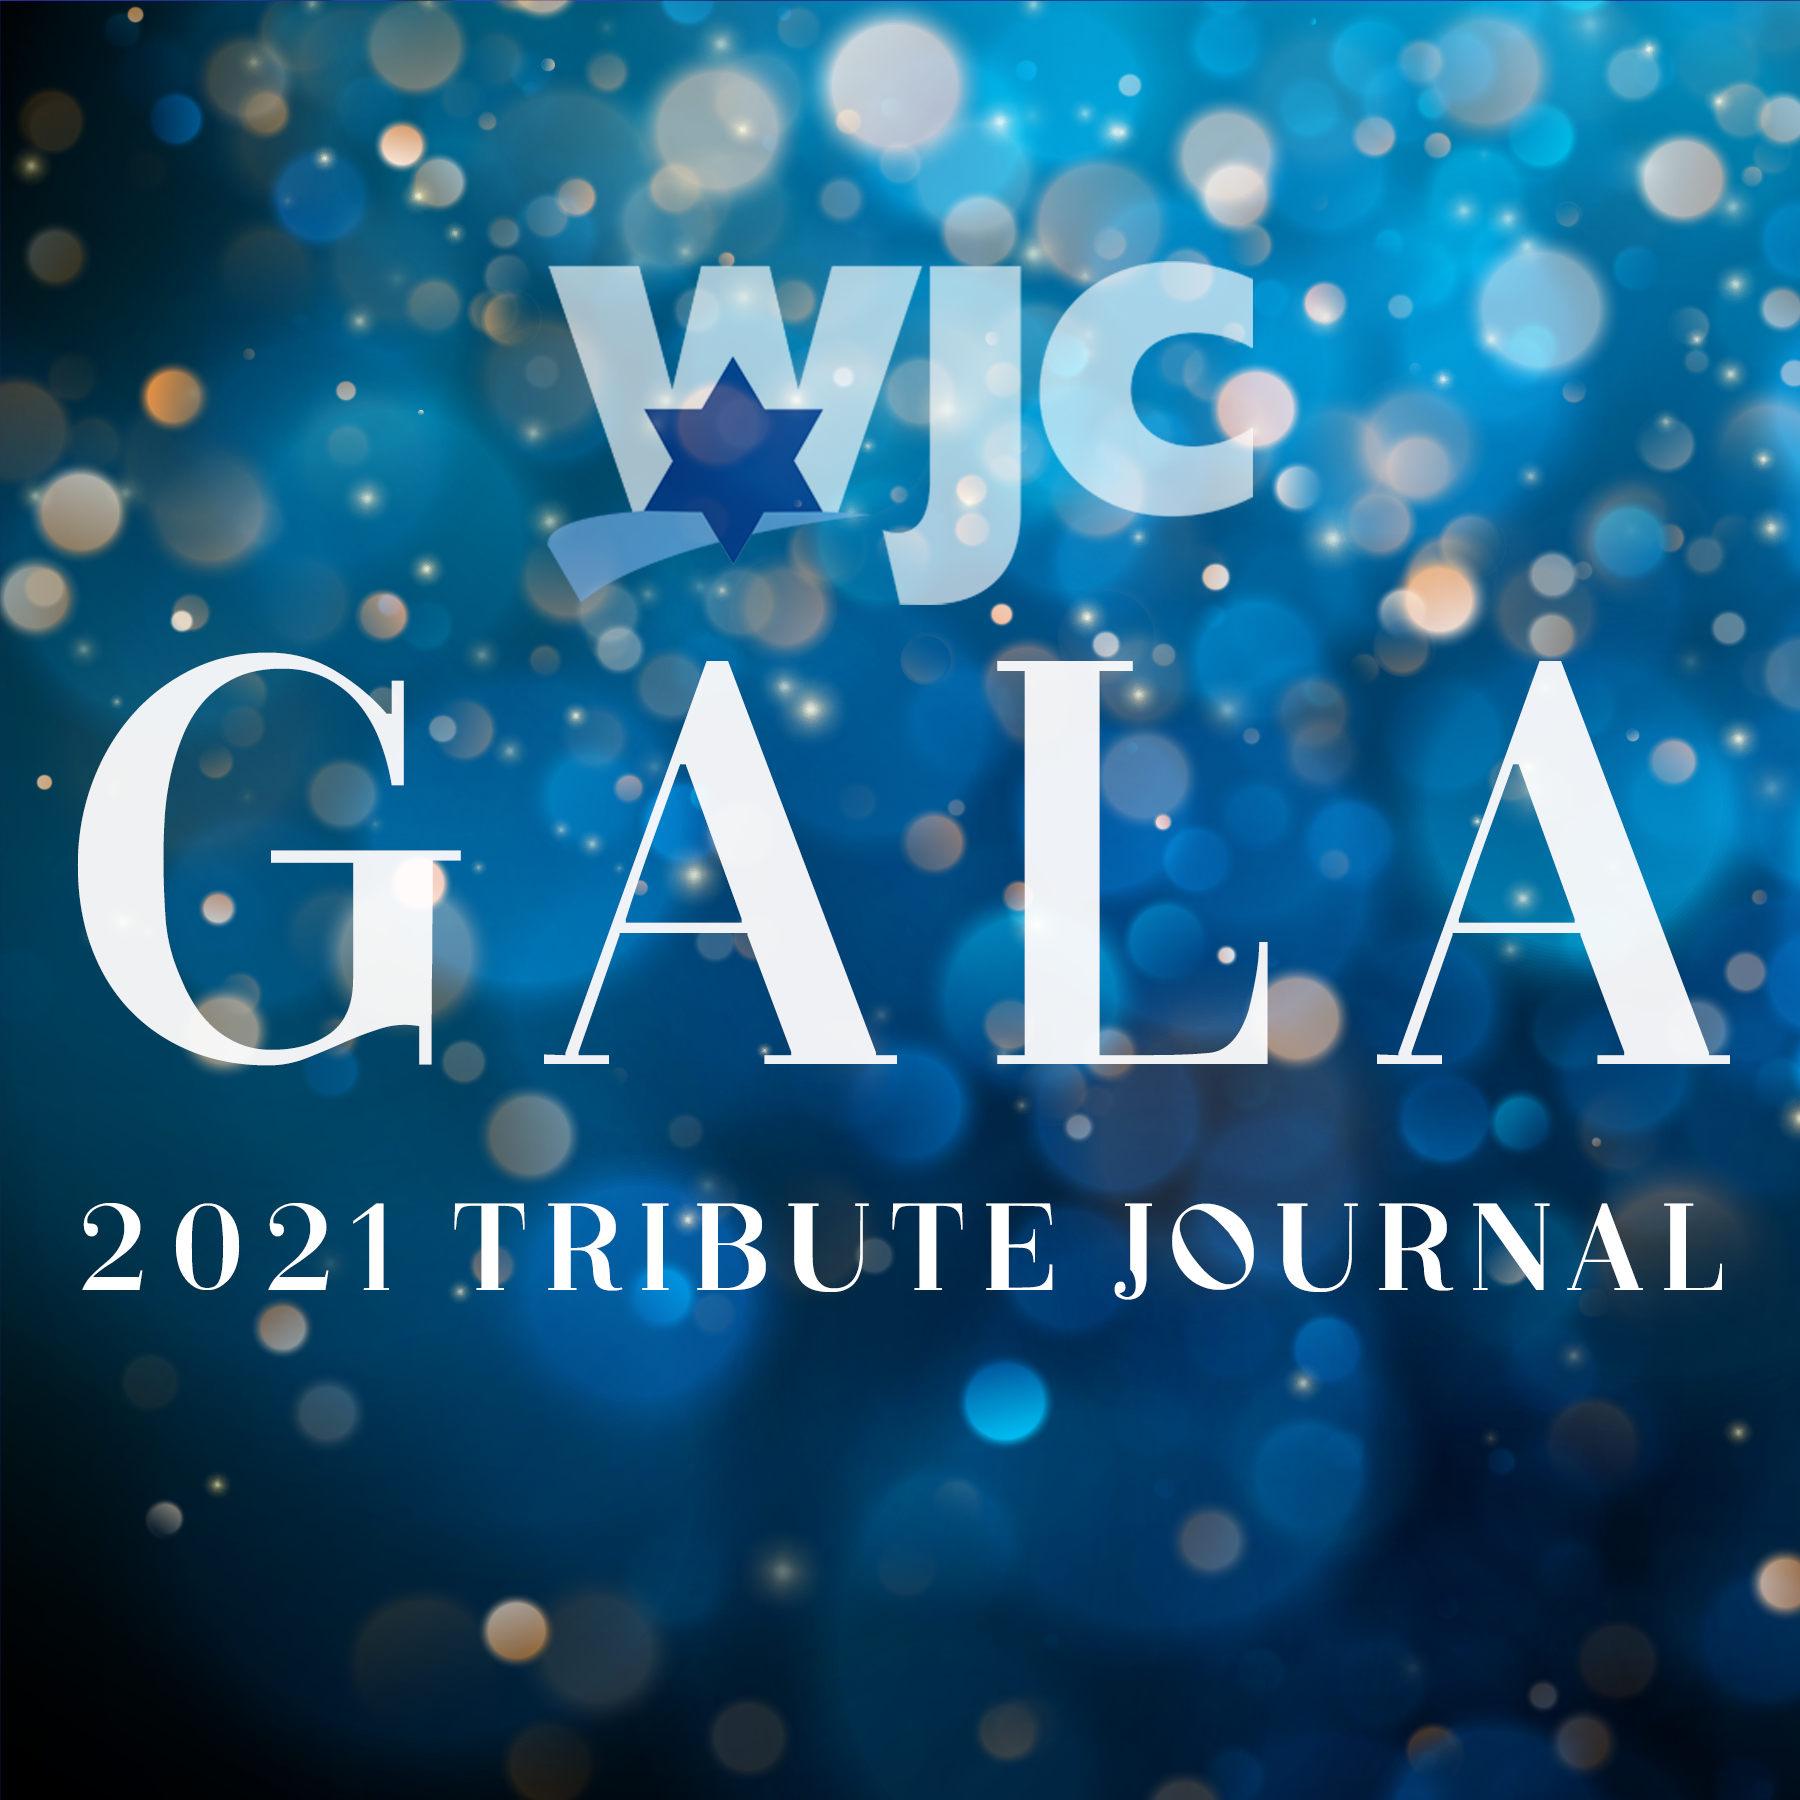 WJC Spring Gala Tribute Journal